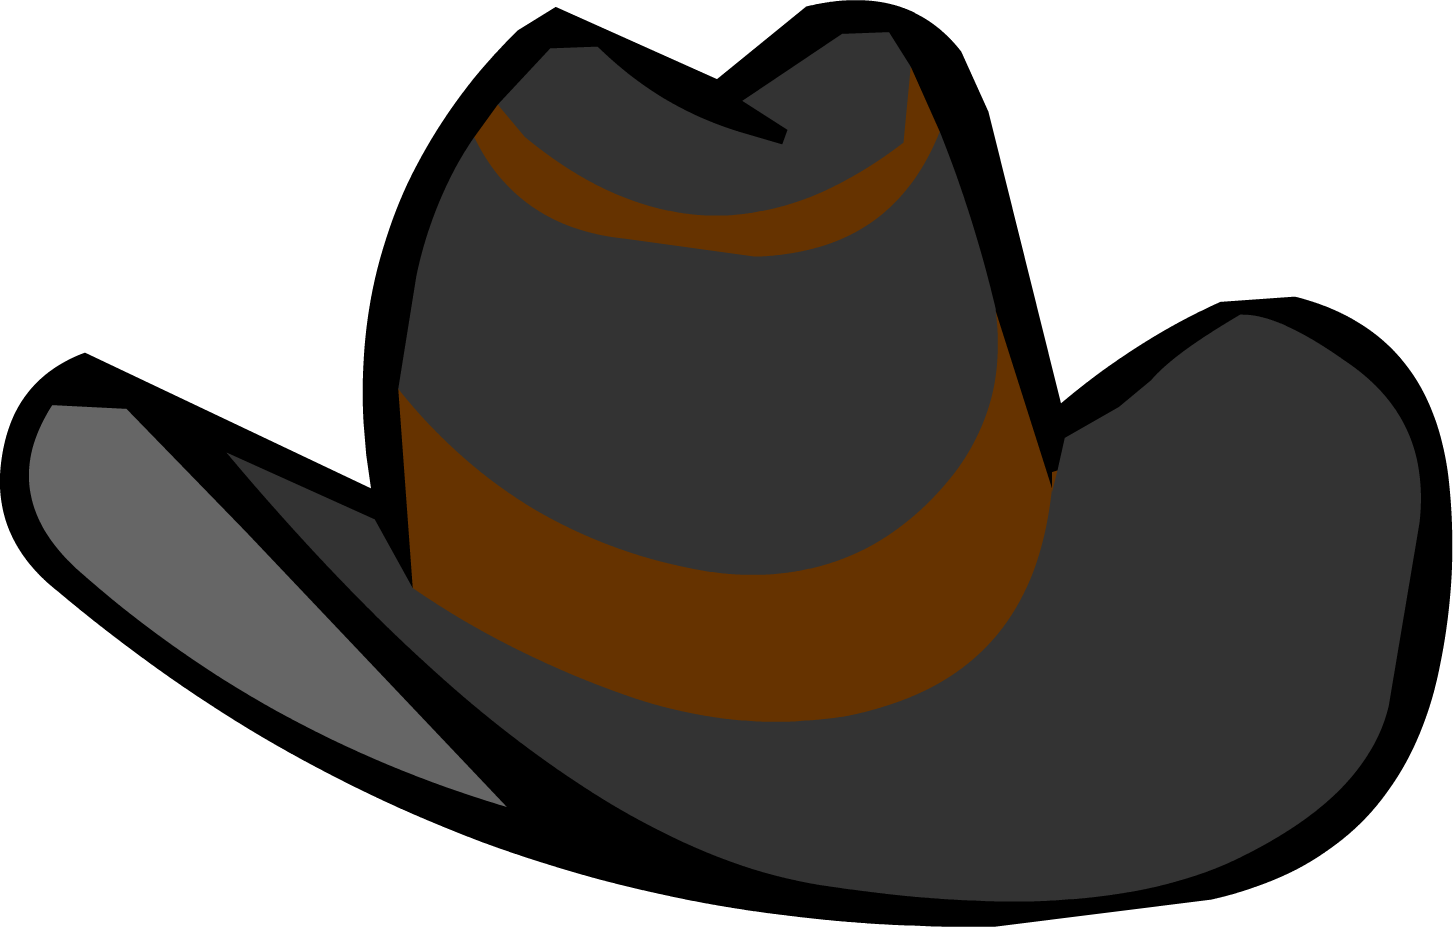 Cowboy Hat Clipart Png Clip Art Library